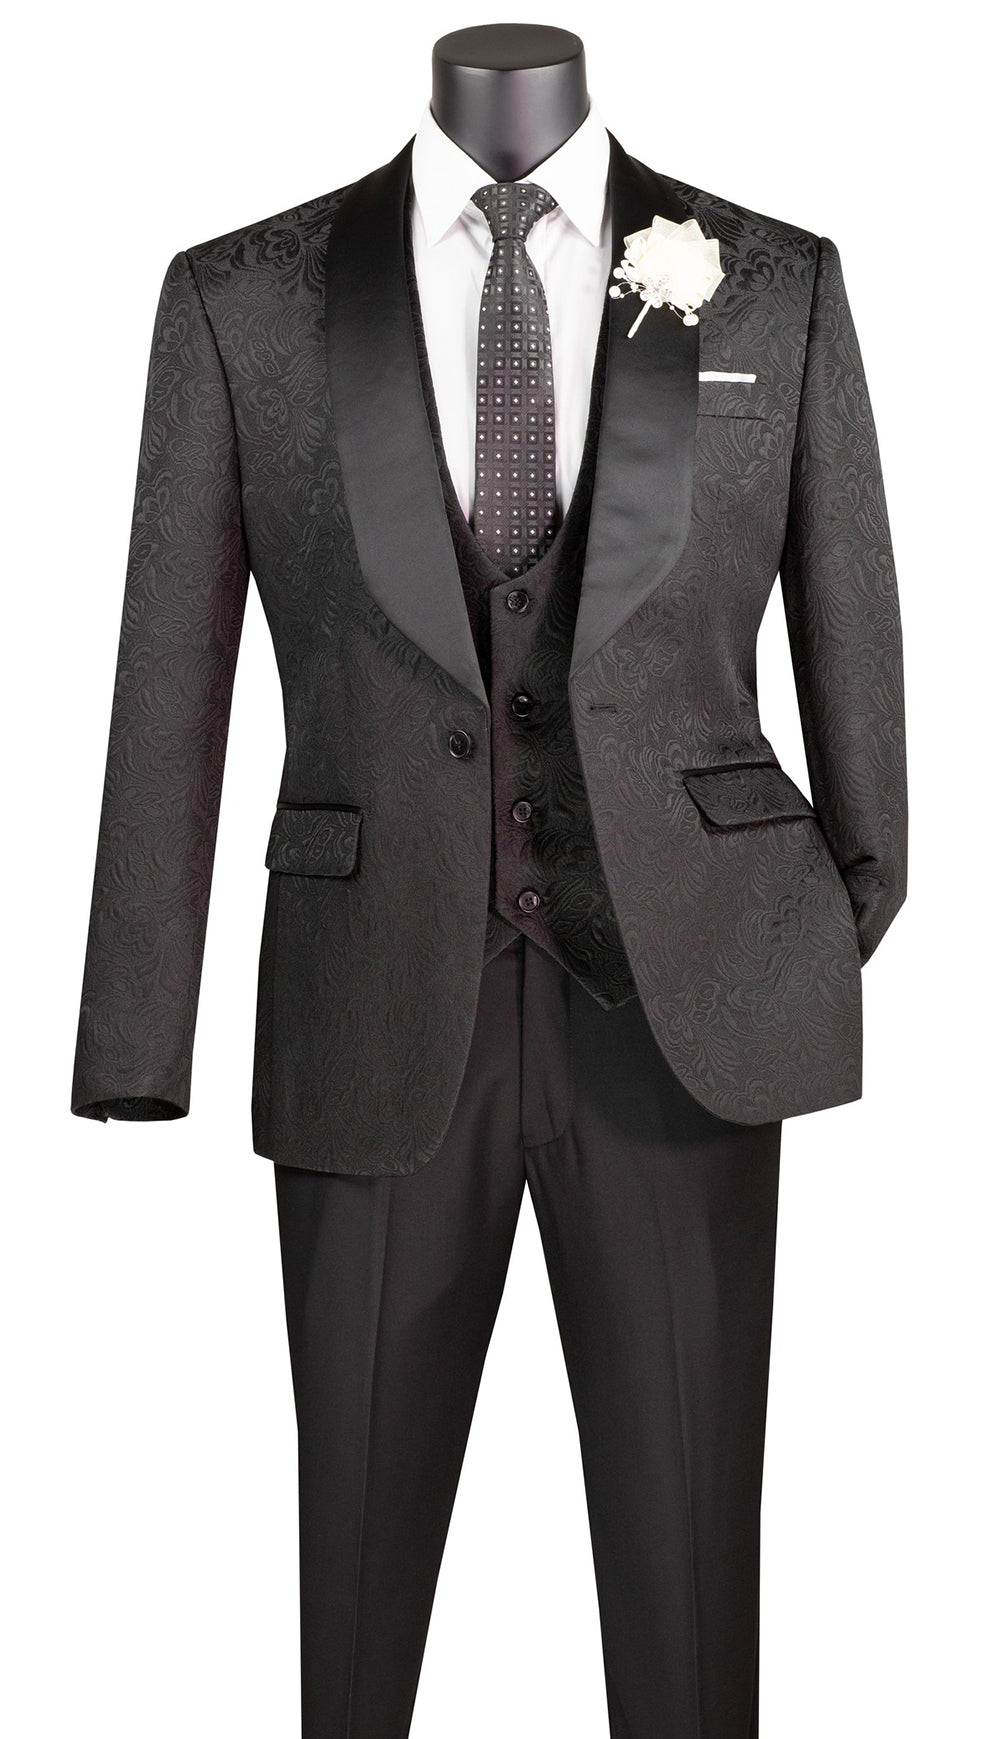 Vinci Tuxedo TVSJ-1-Black - Church Suits For Less